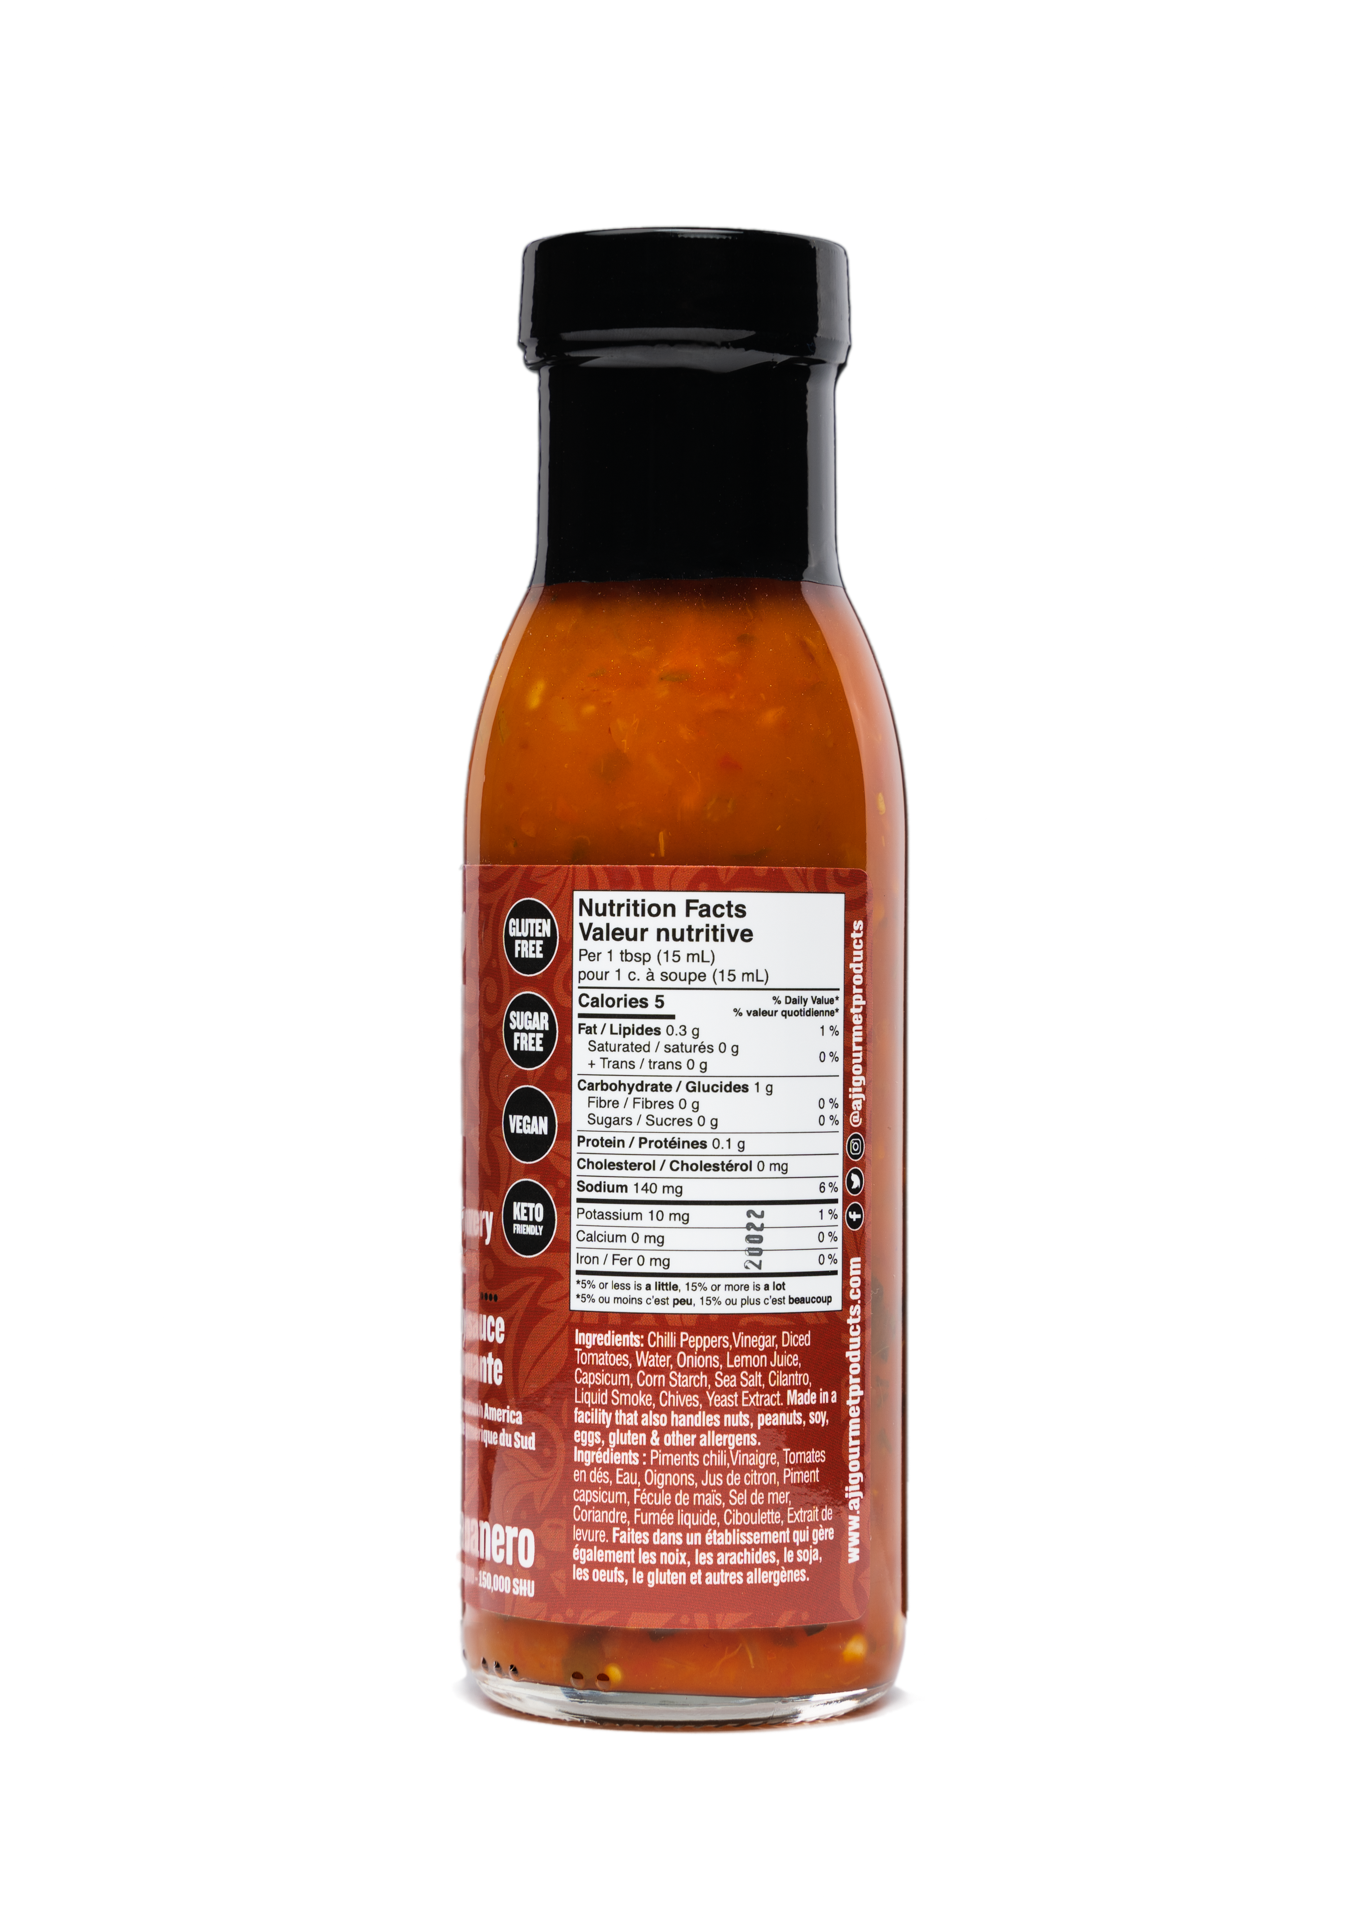 Smokin' Habanero Very Hot Sauce - Dyana's Aji (225ml) - BCause